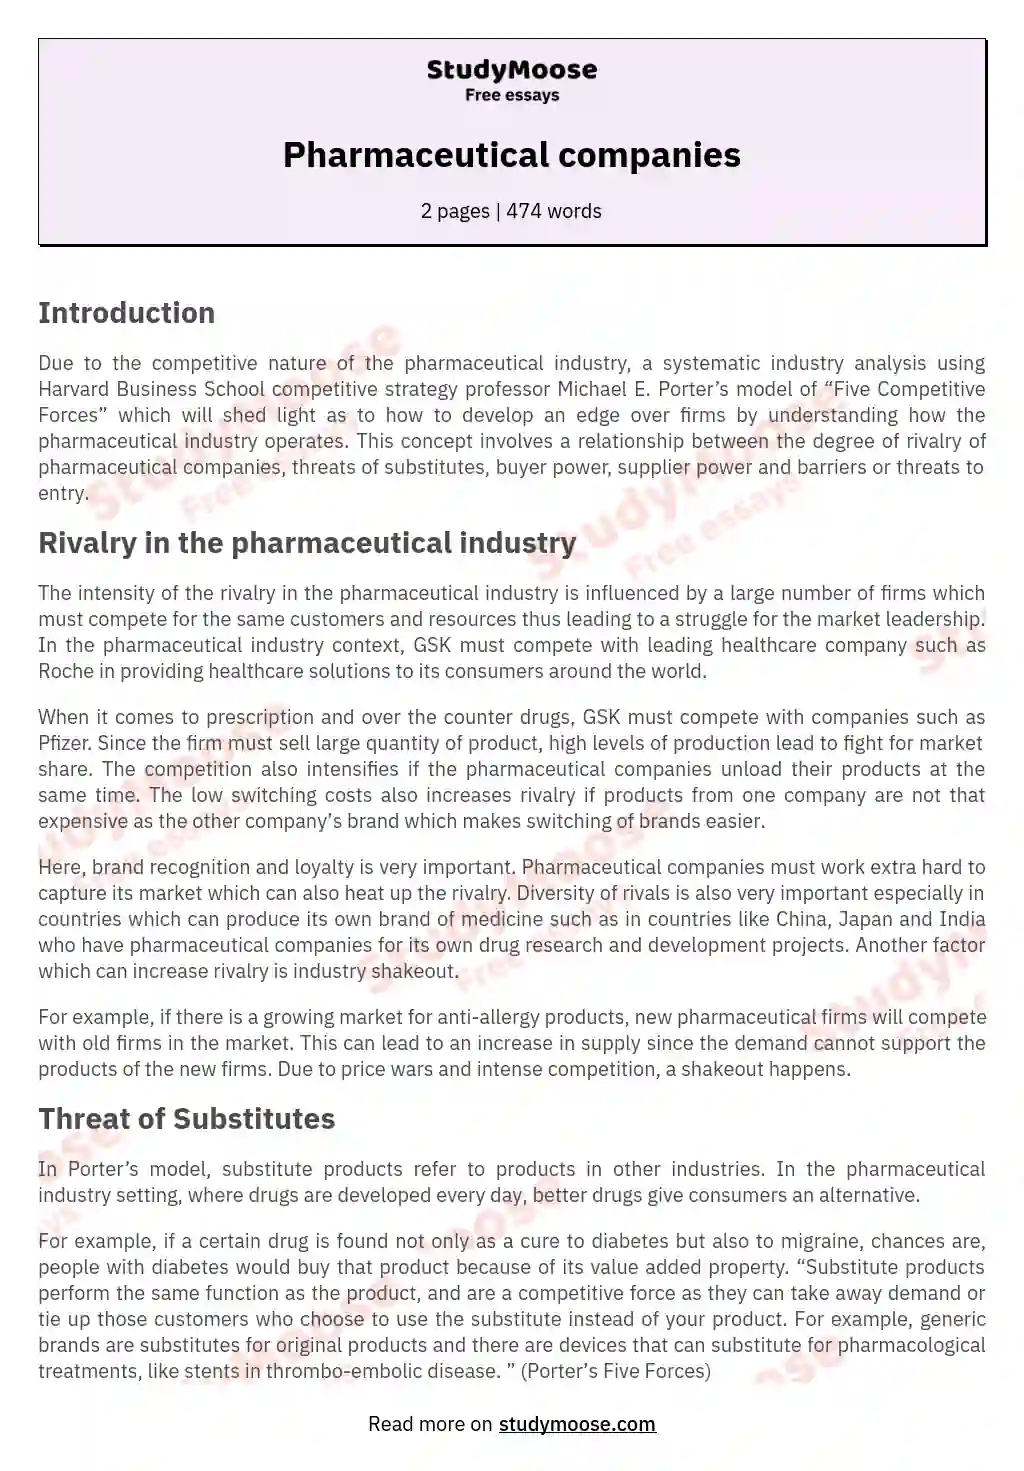 Pharmaceutical companies essay